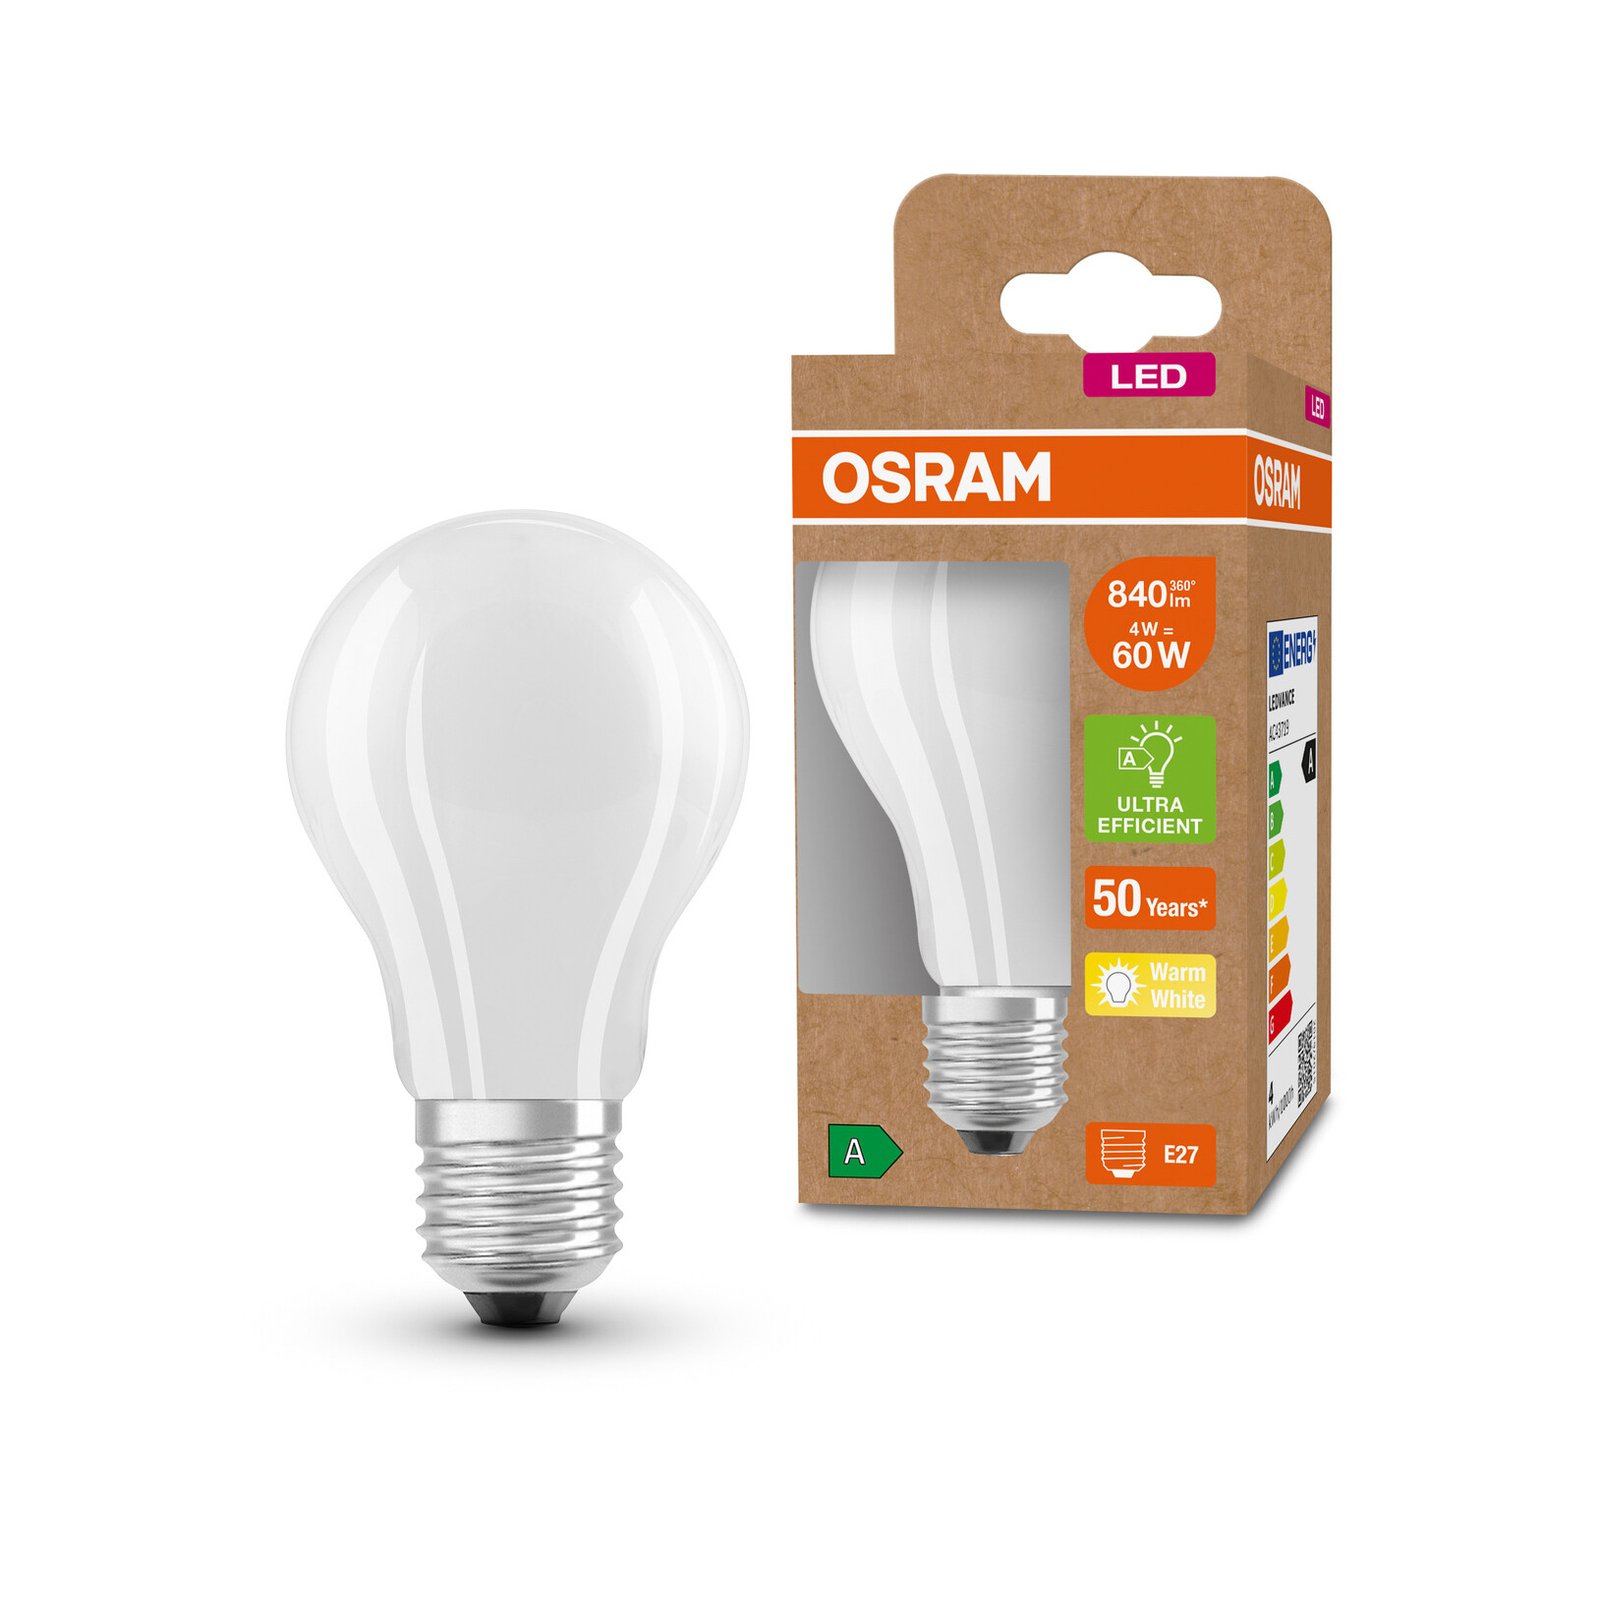 OSRAM LED bulb E27 A60 3.8W 840lm 3,000K matt